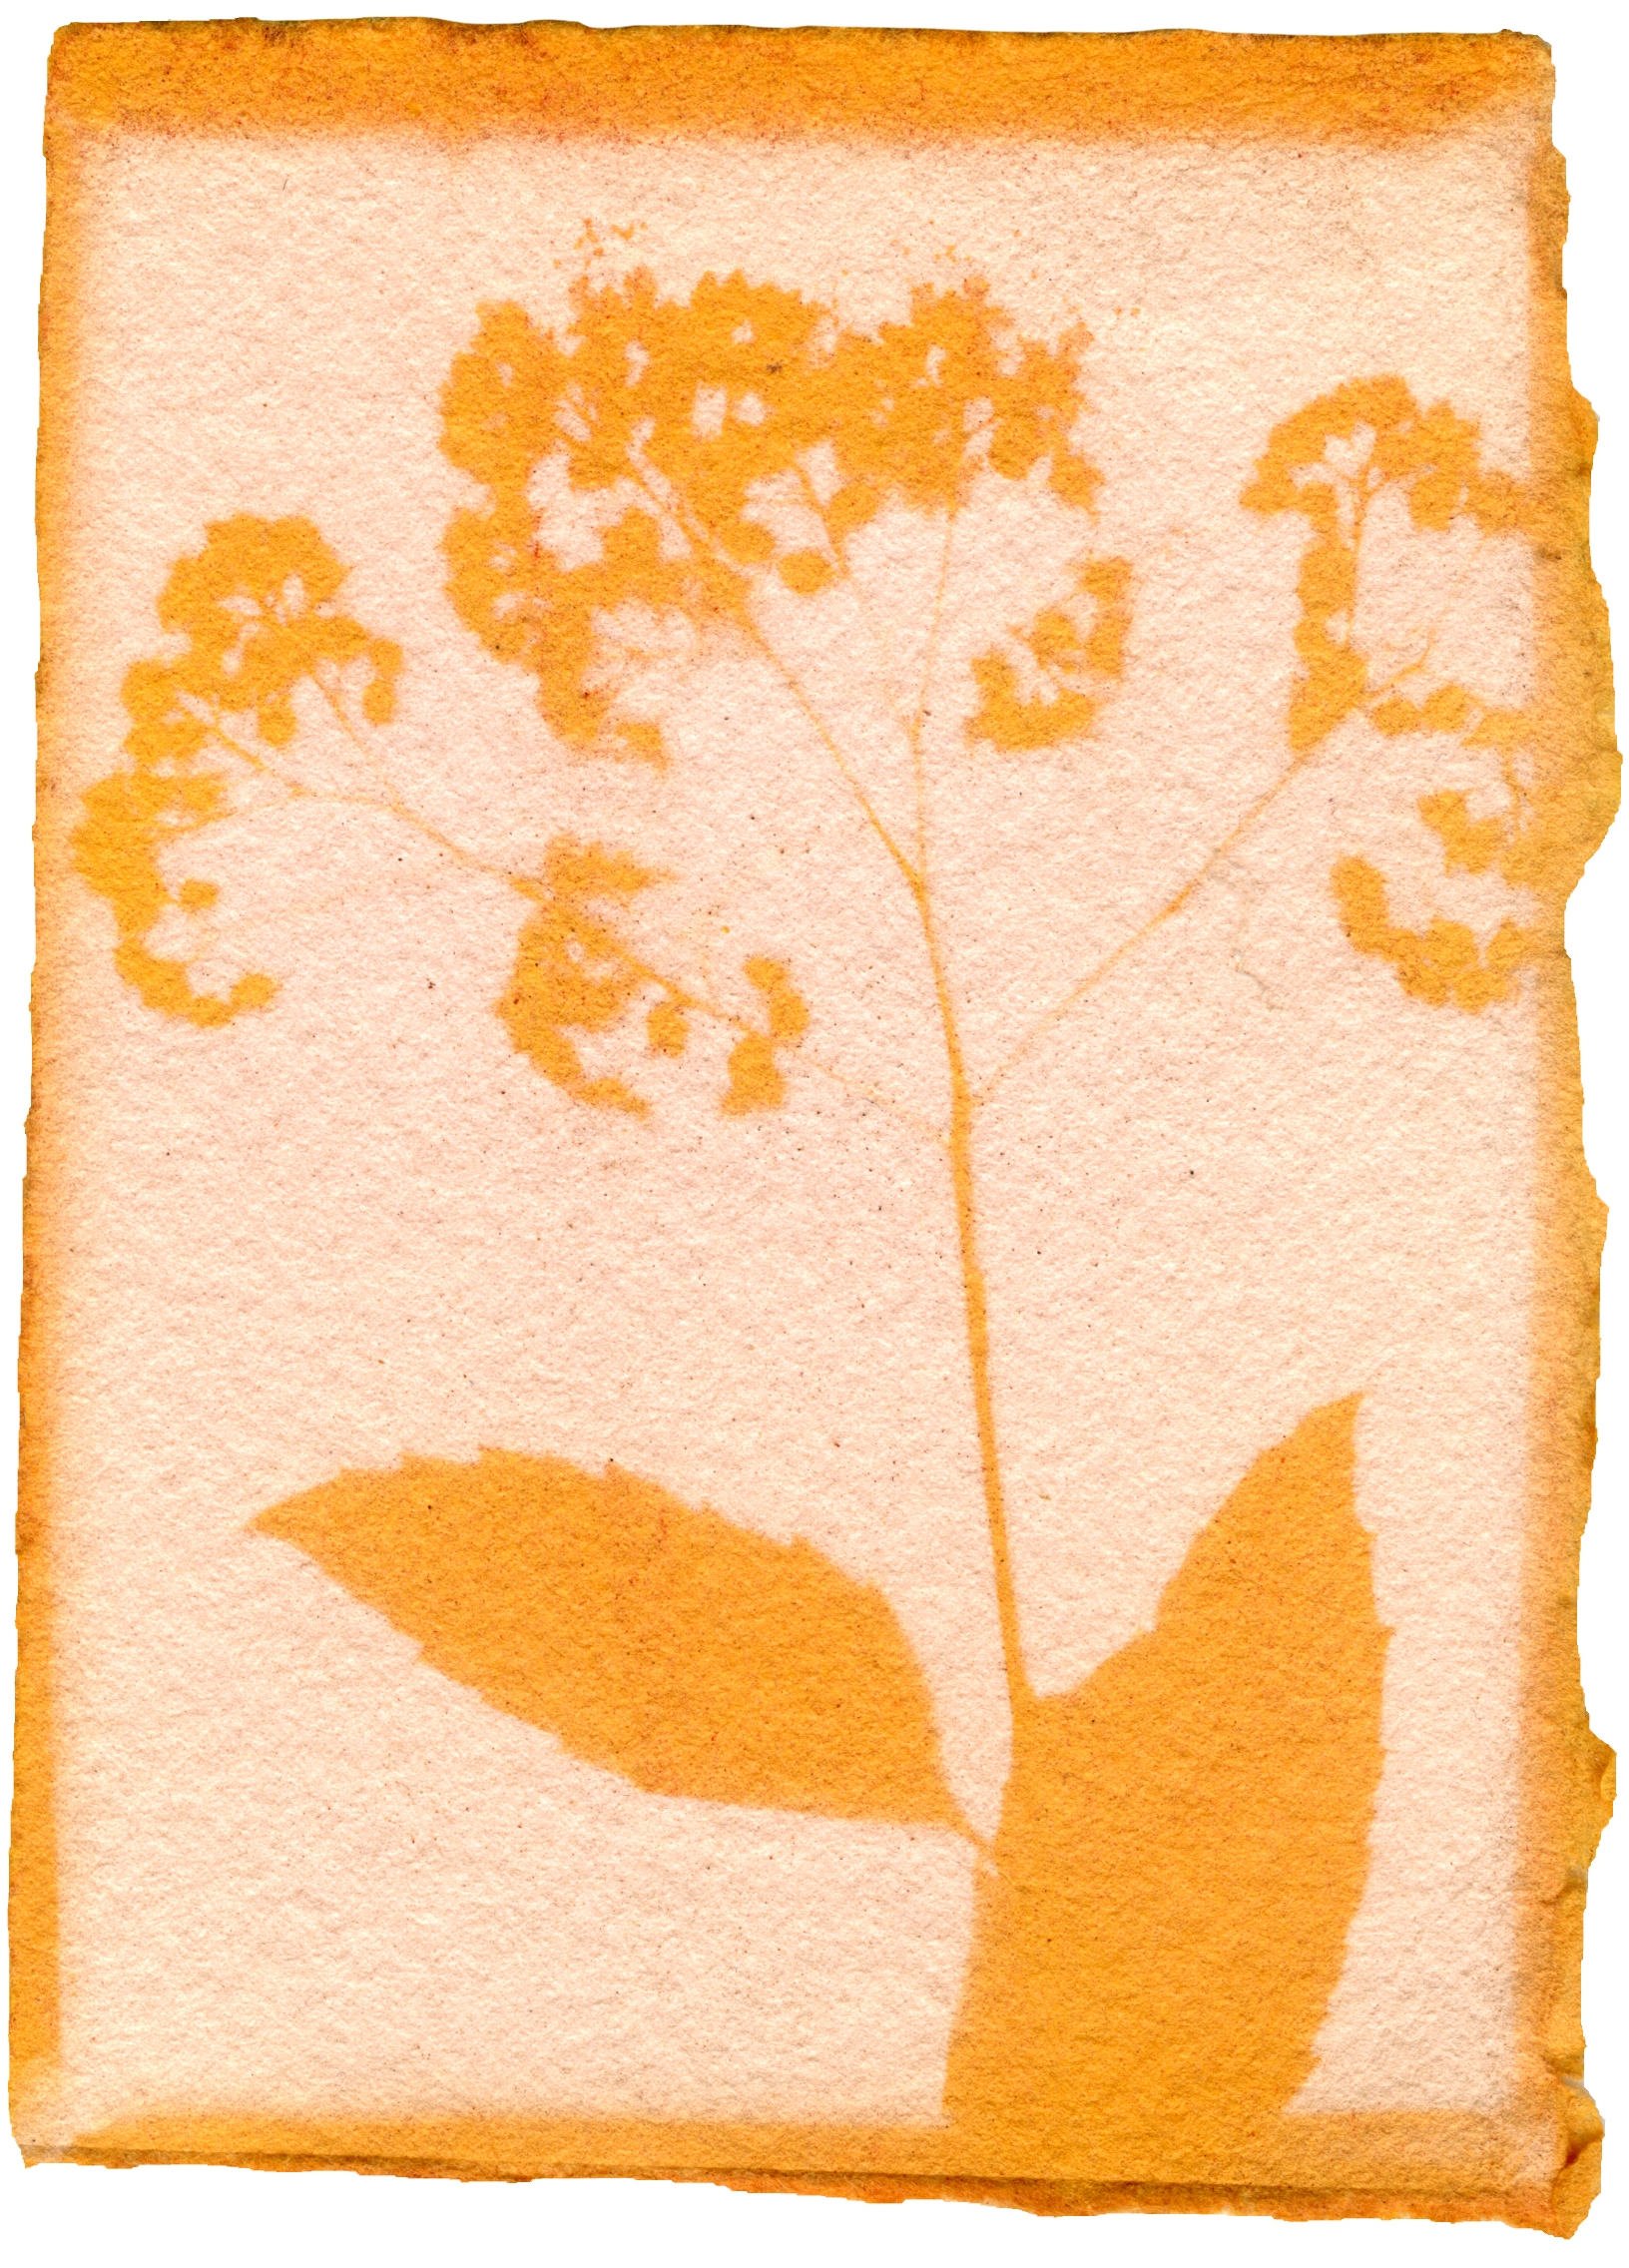 Spiraea Japonica with Achiote Emulsion, 3.5" x 2.5", 2018